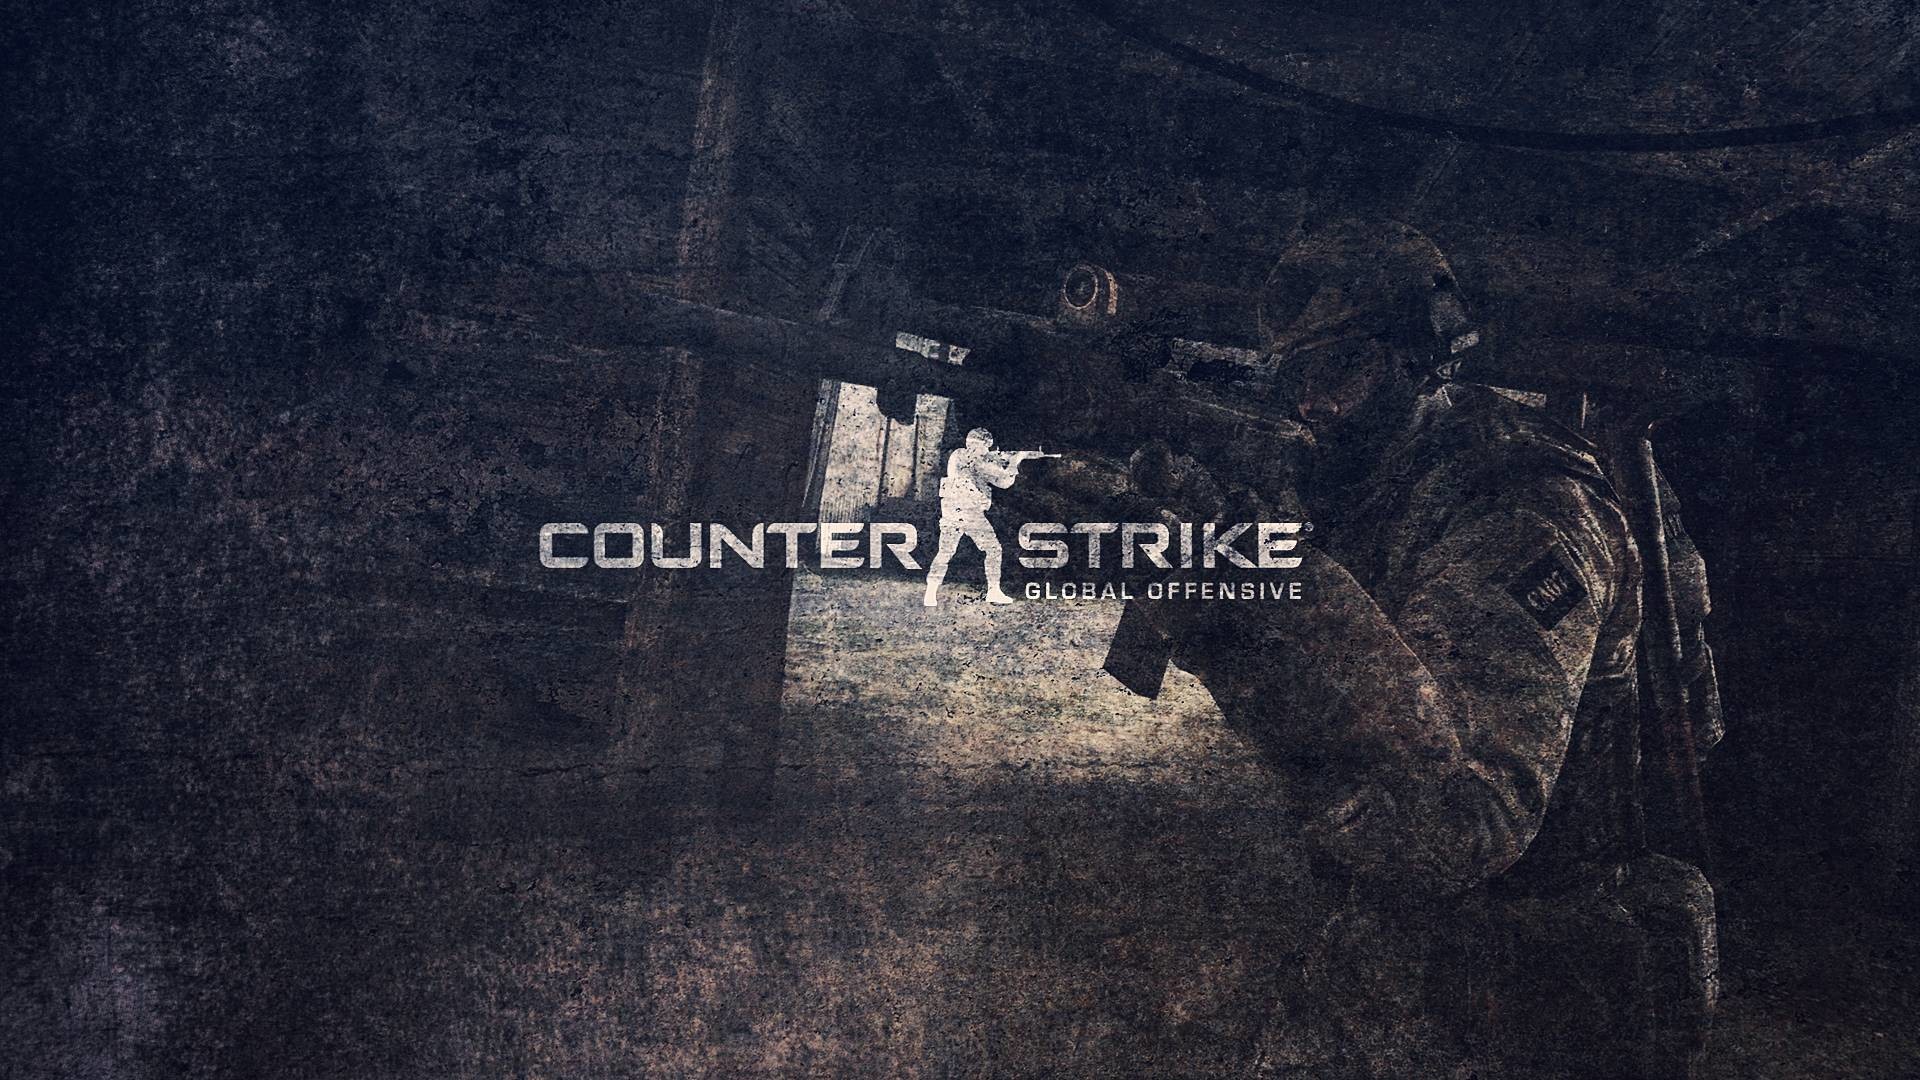 1920x1080 ... Counter-Strike: Global Offensive Wallpaper ...